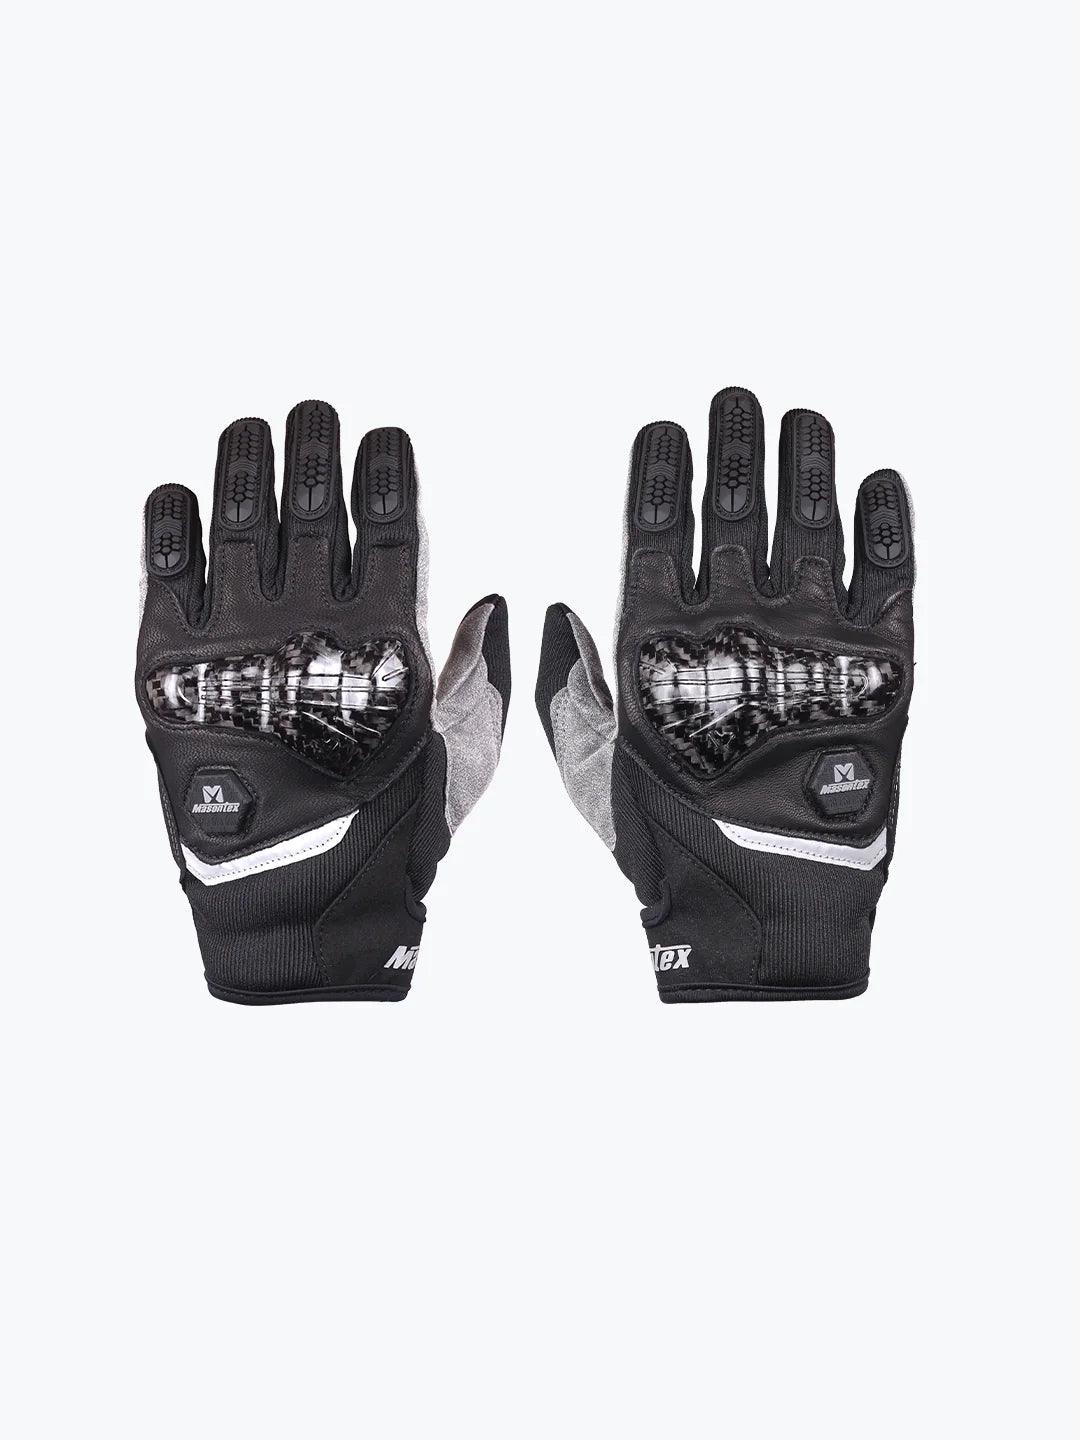 Masontex Full Gloves Black M30IV Carbon - Moto Modz